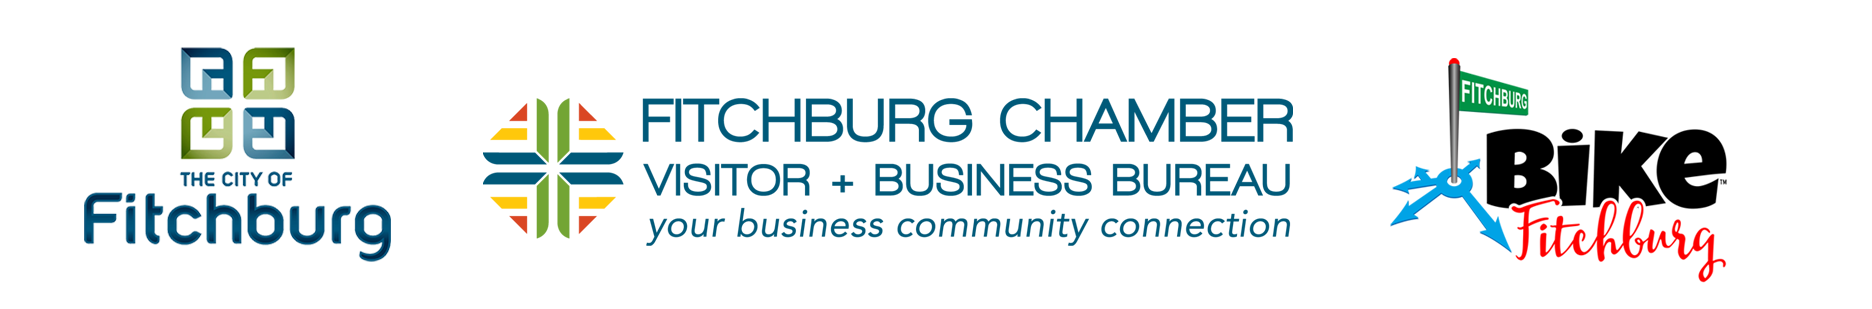 Fitchburg city, chamber and Bike Fitchburg logos